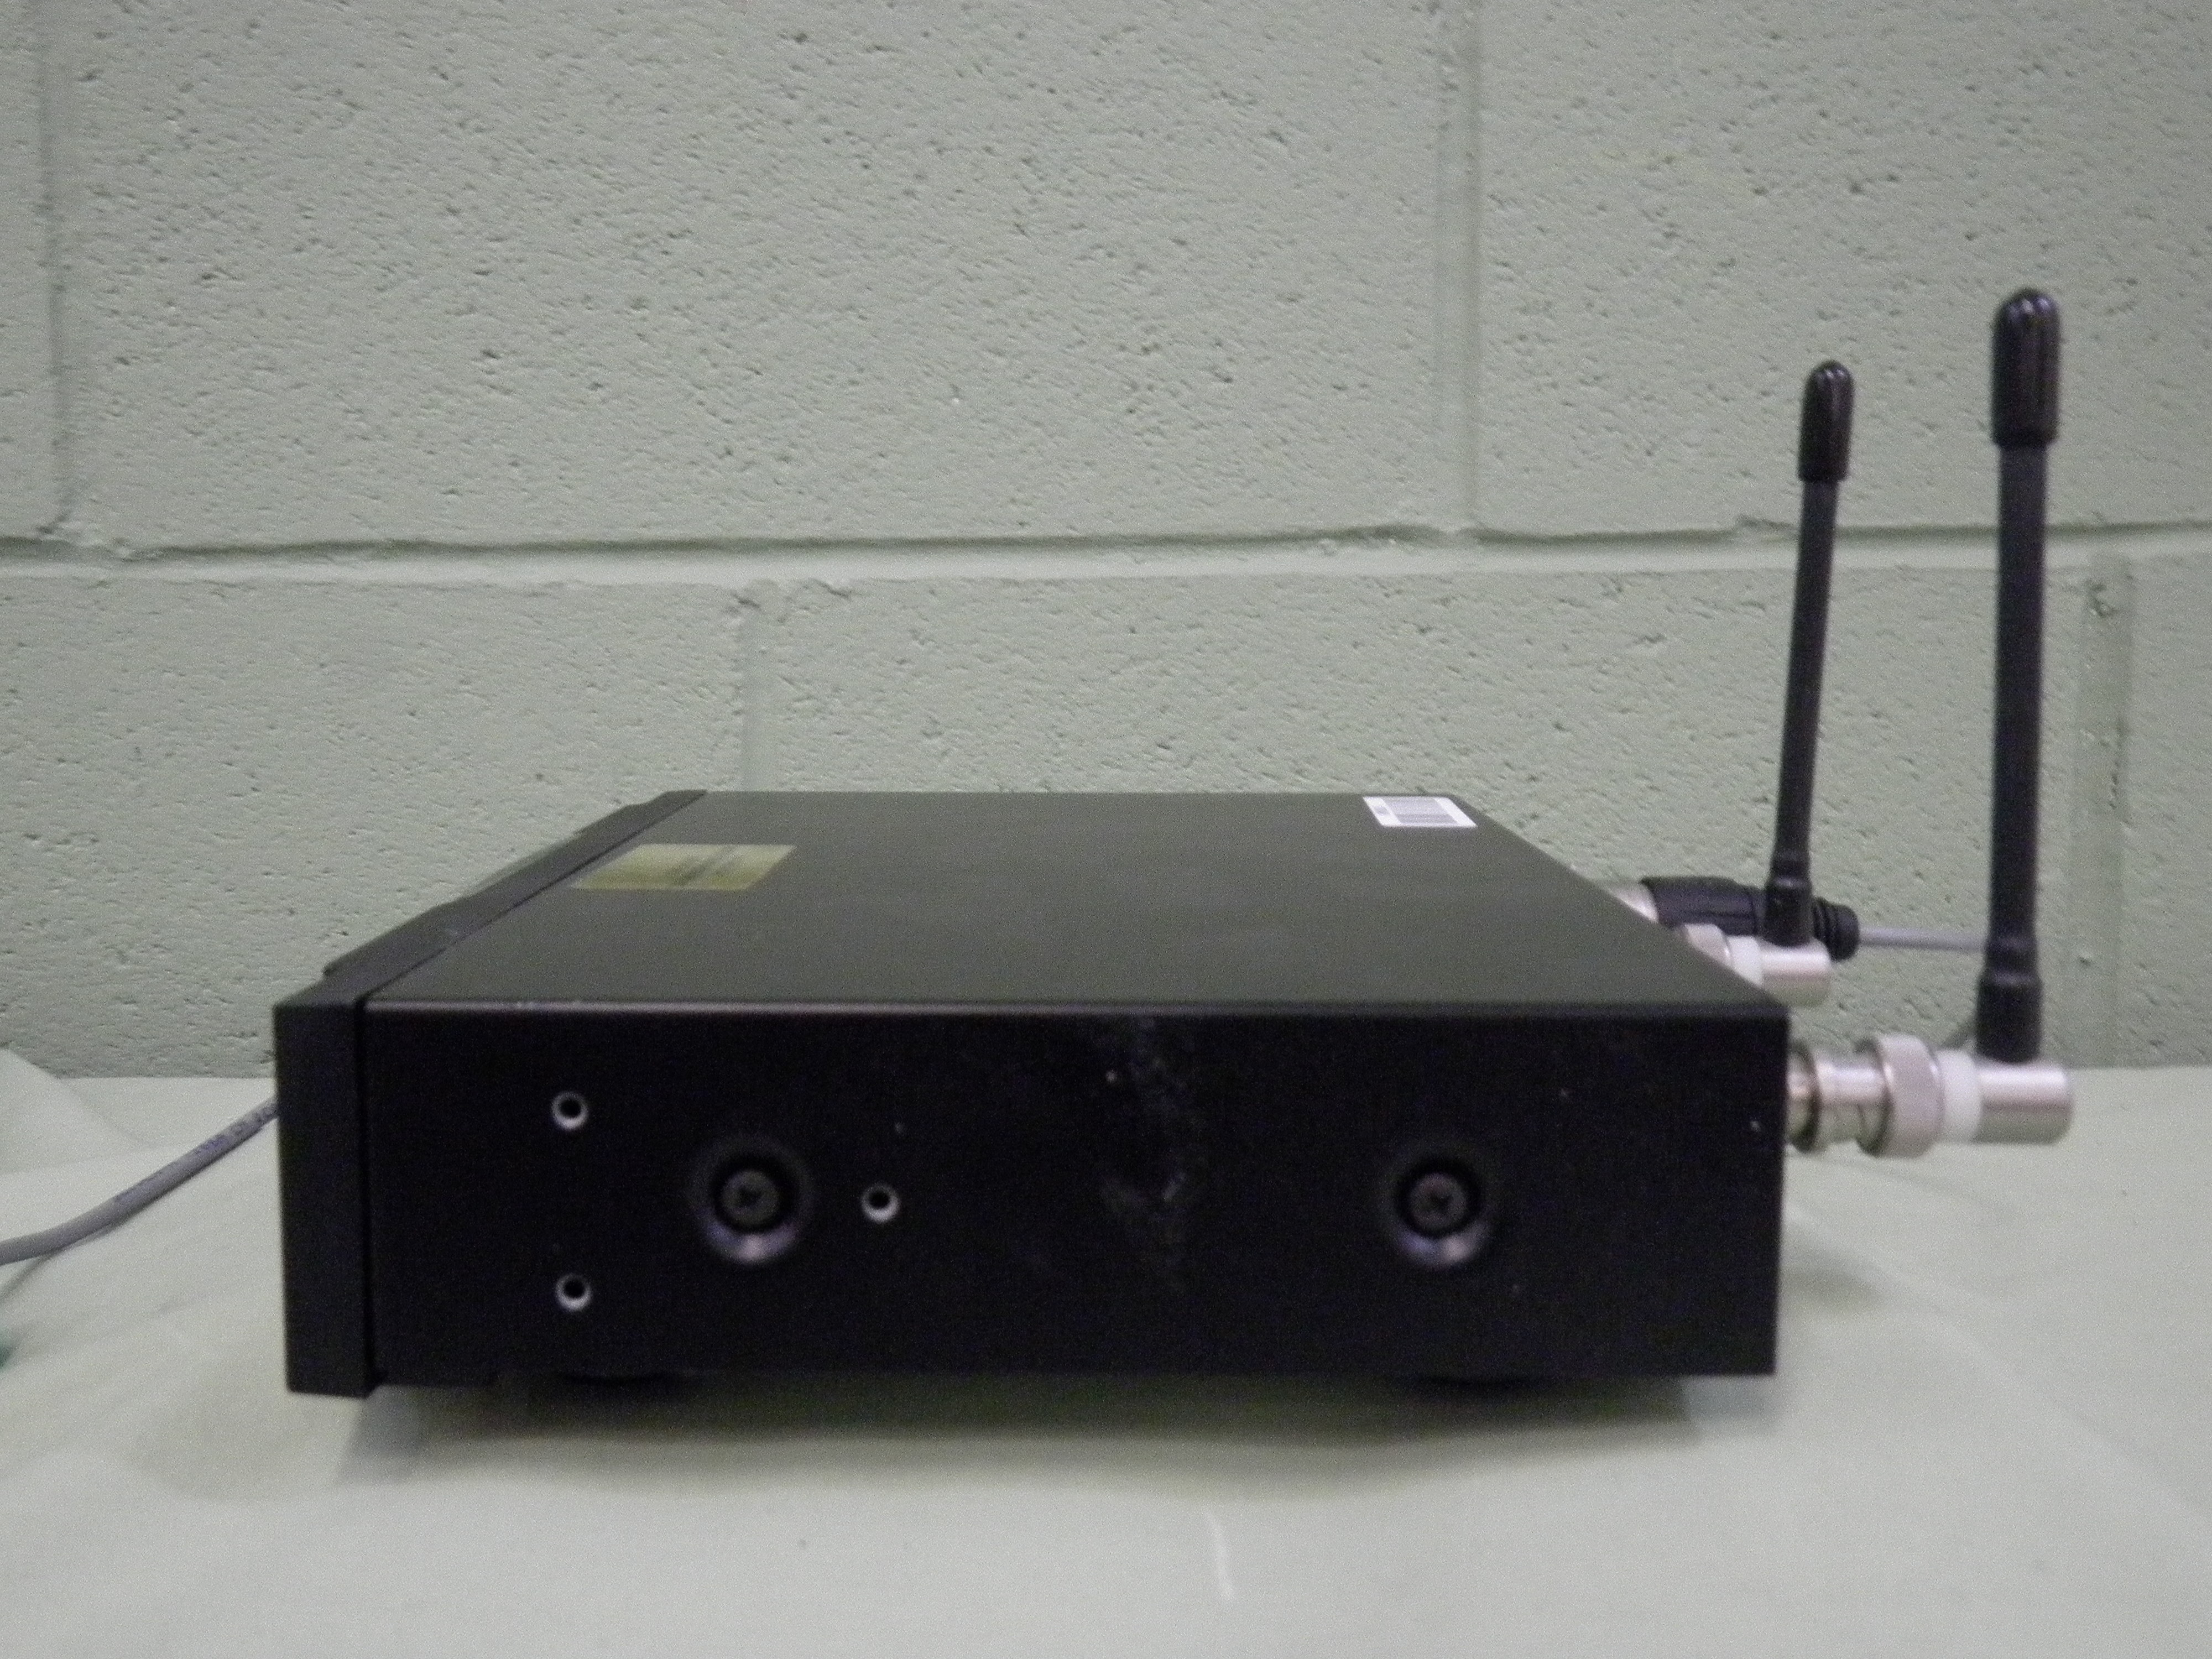 Audio-Technica ATW-R3100D